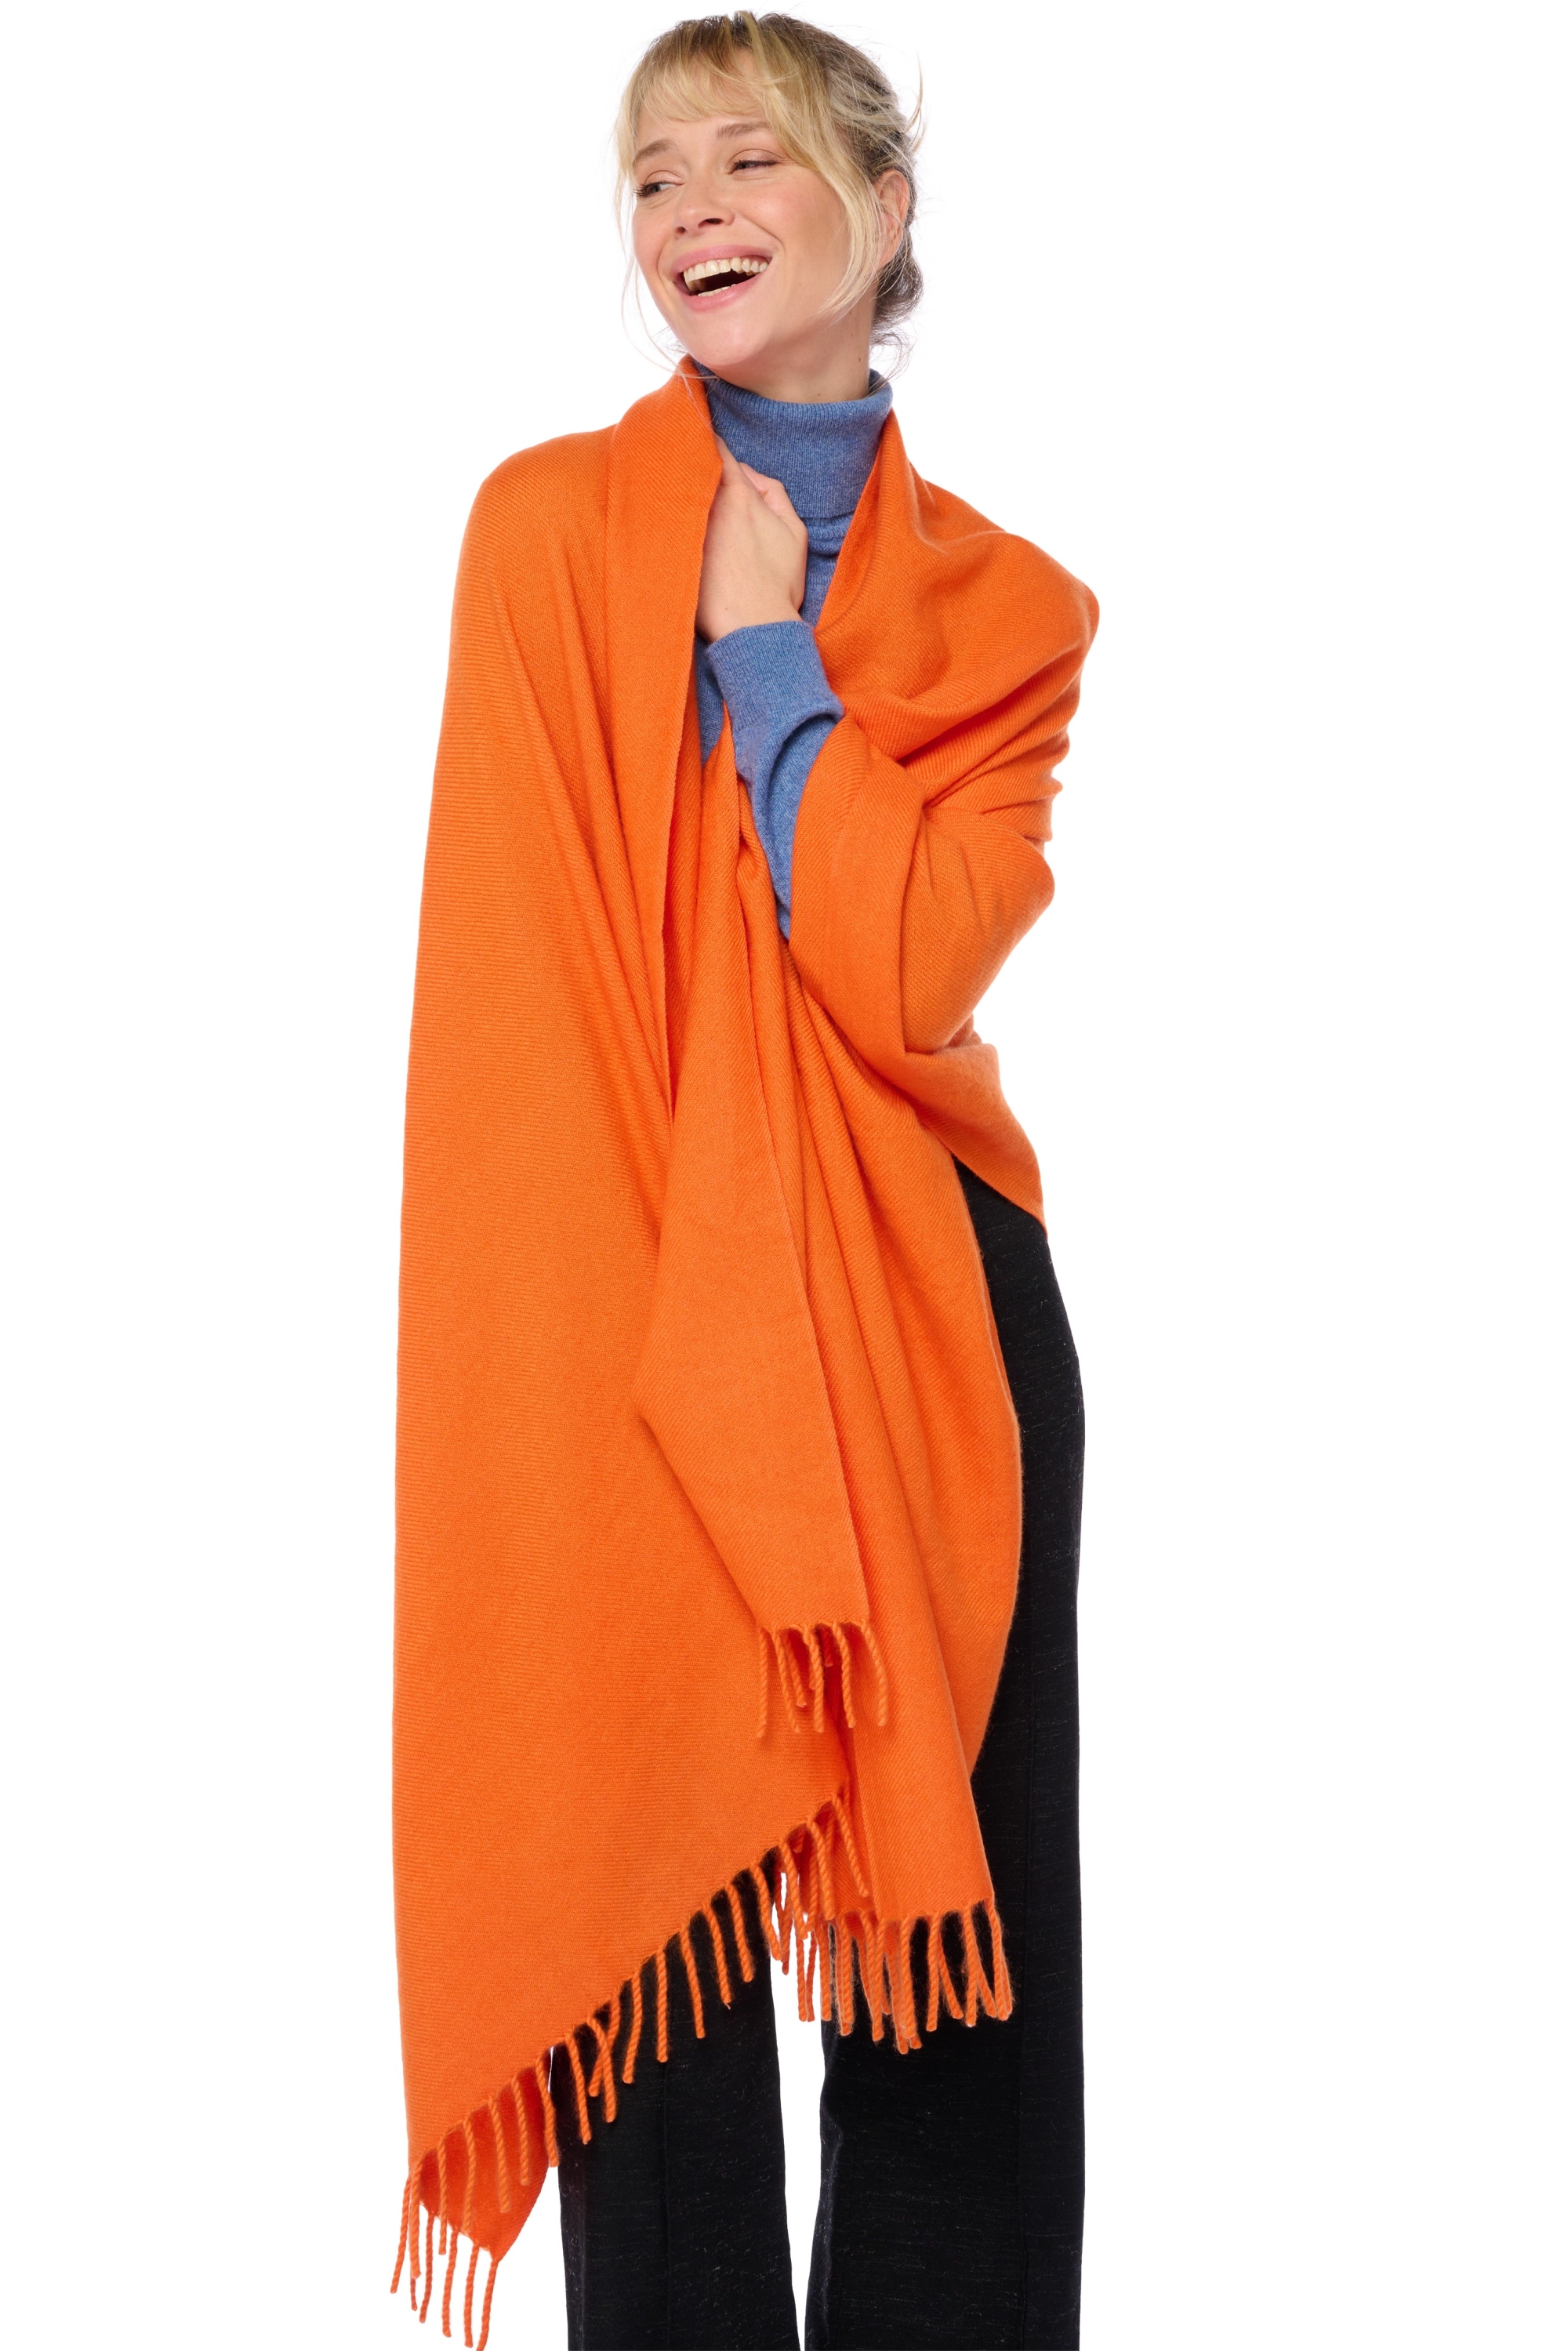 Cachemire pull femme etoles chales niry orange 200x90cm